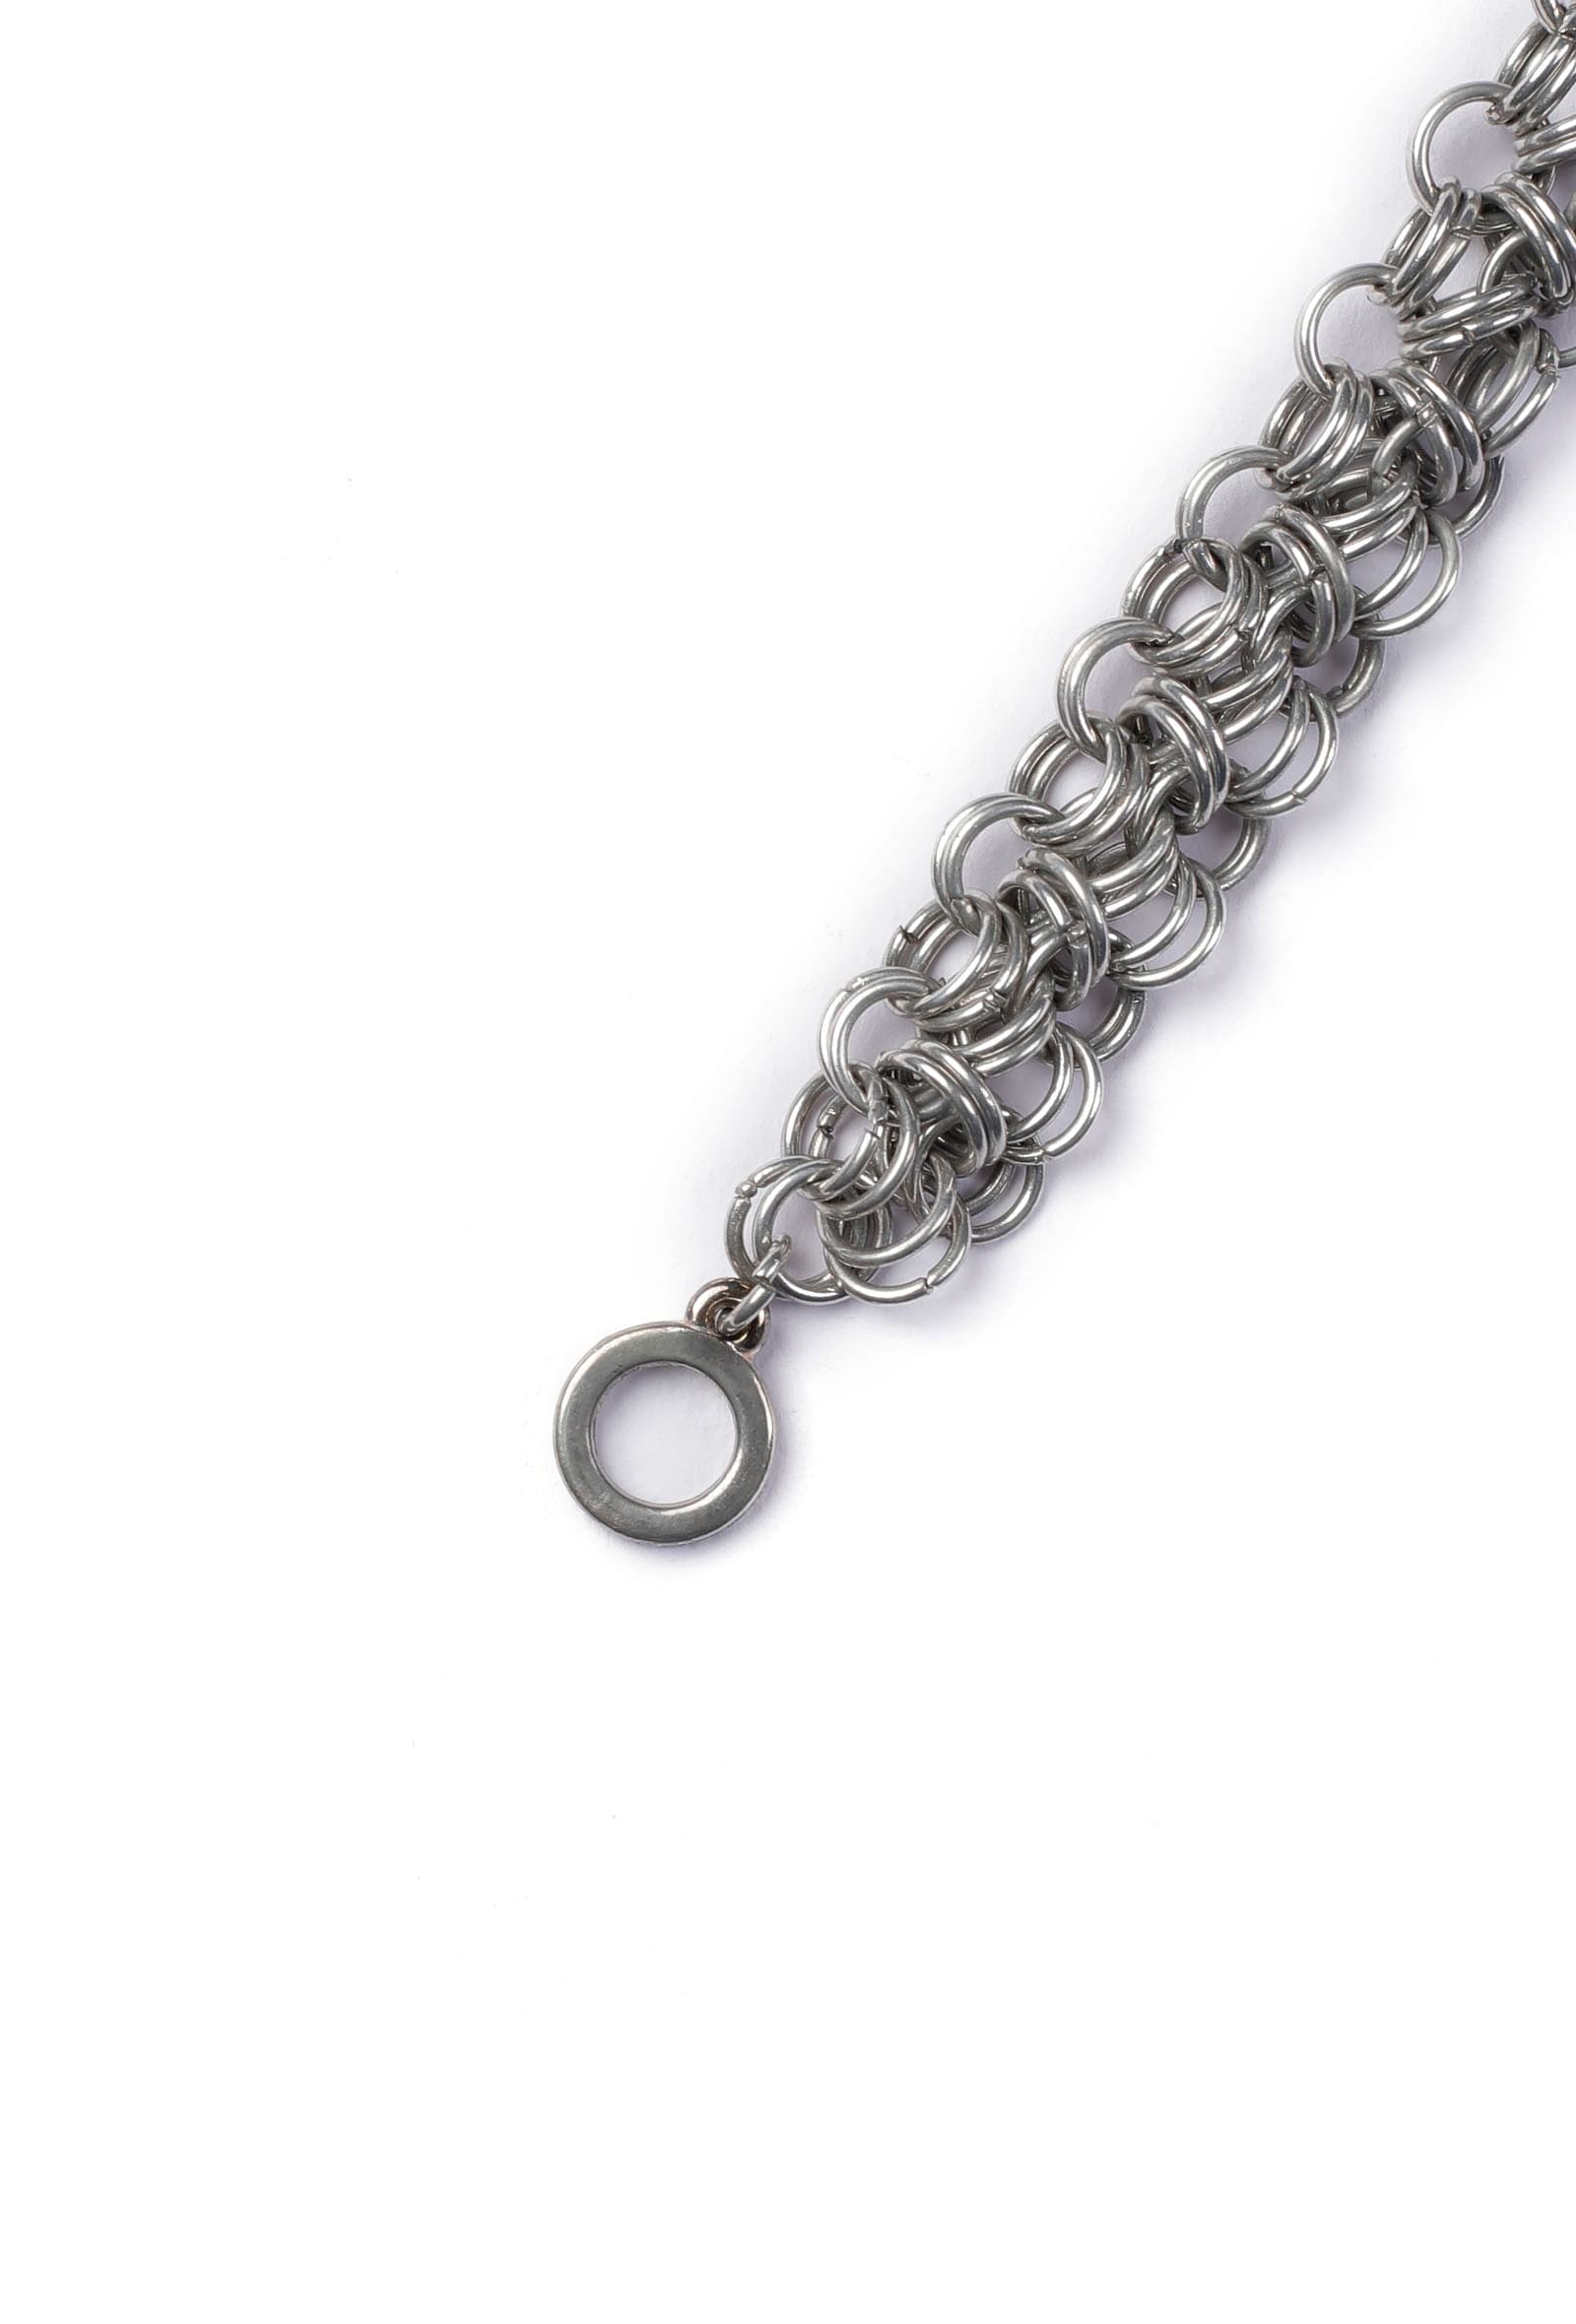 Zara Silver Chain Necklace